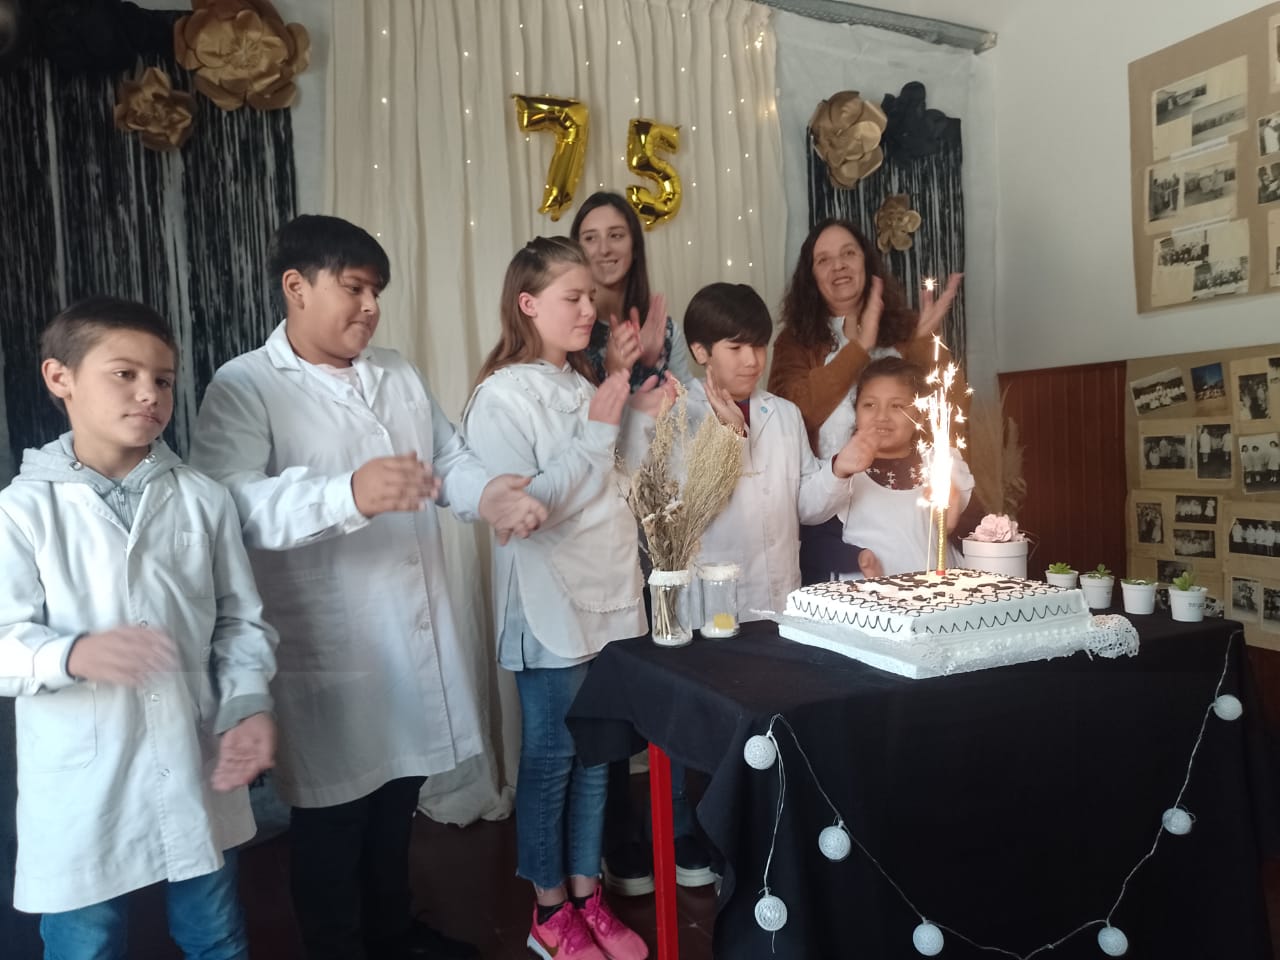 La Escuela Primaria Nº 27 “Almafuerte” celebró su 75º aniversario